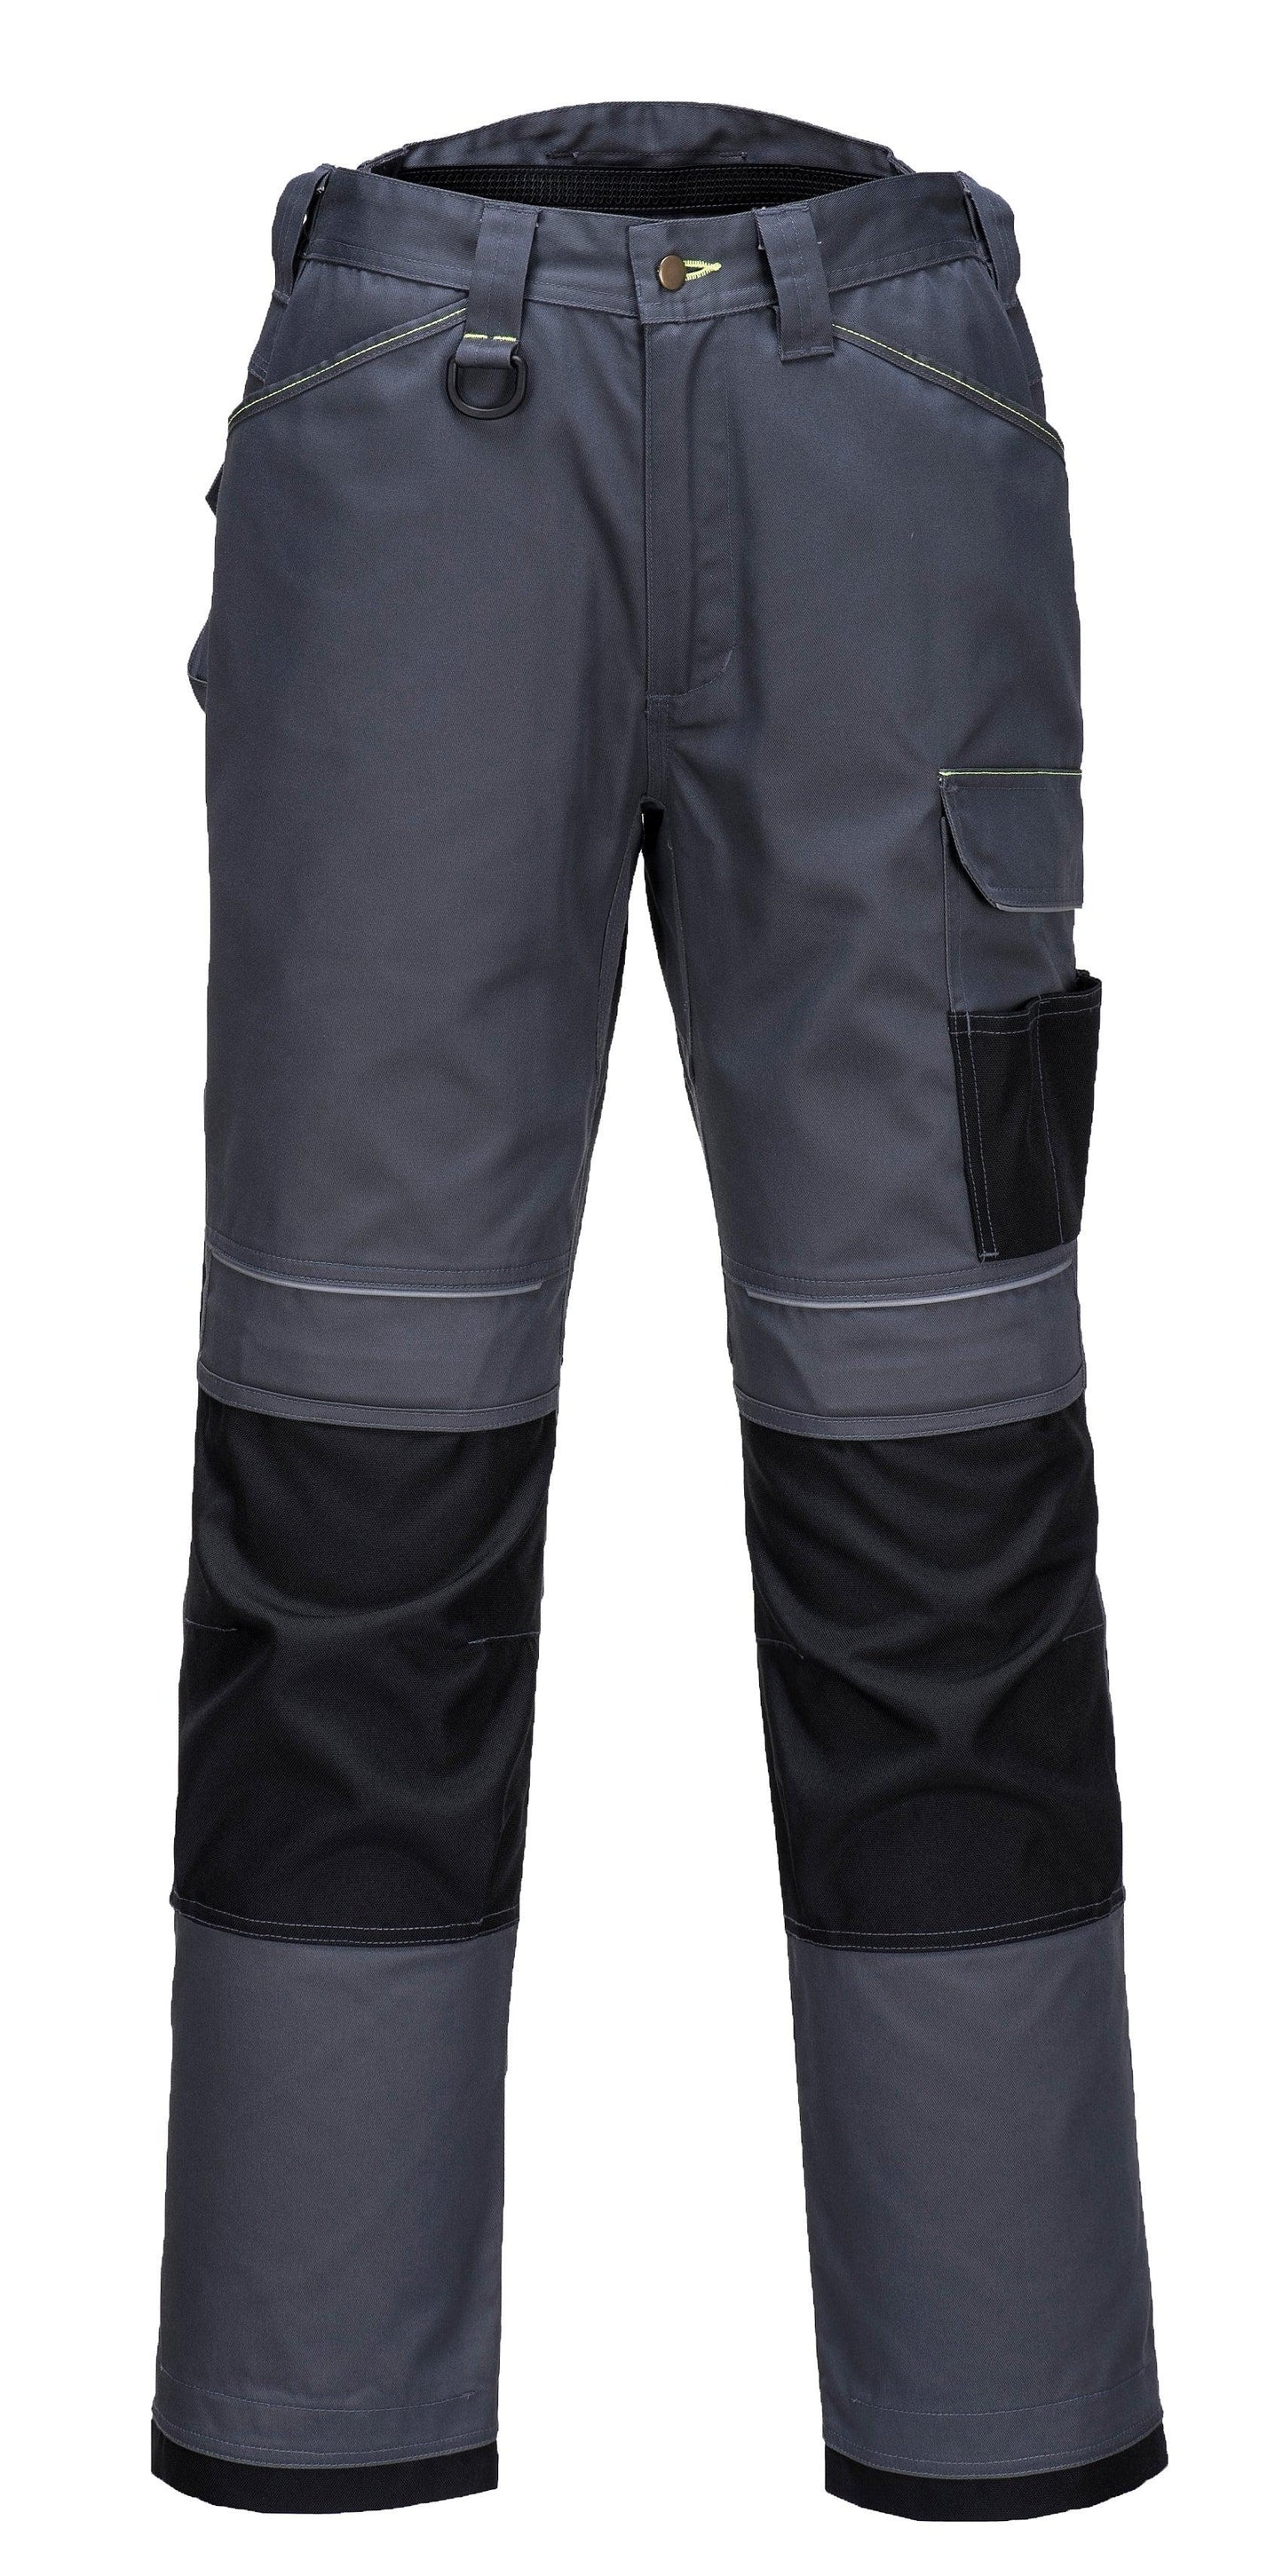 Urban work trousers PW364 - Trustsport